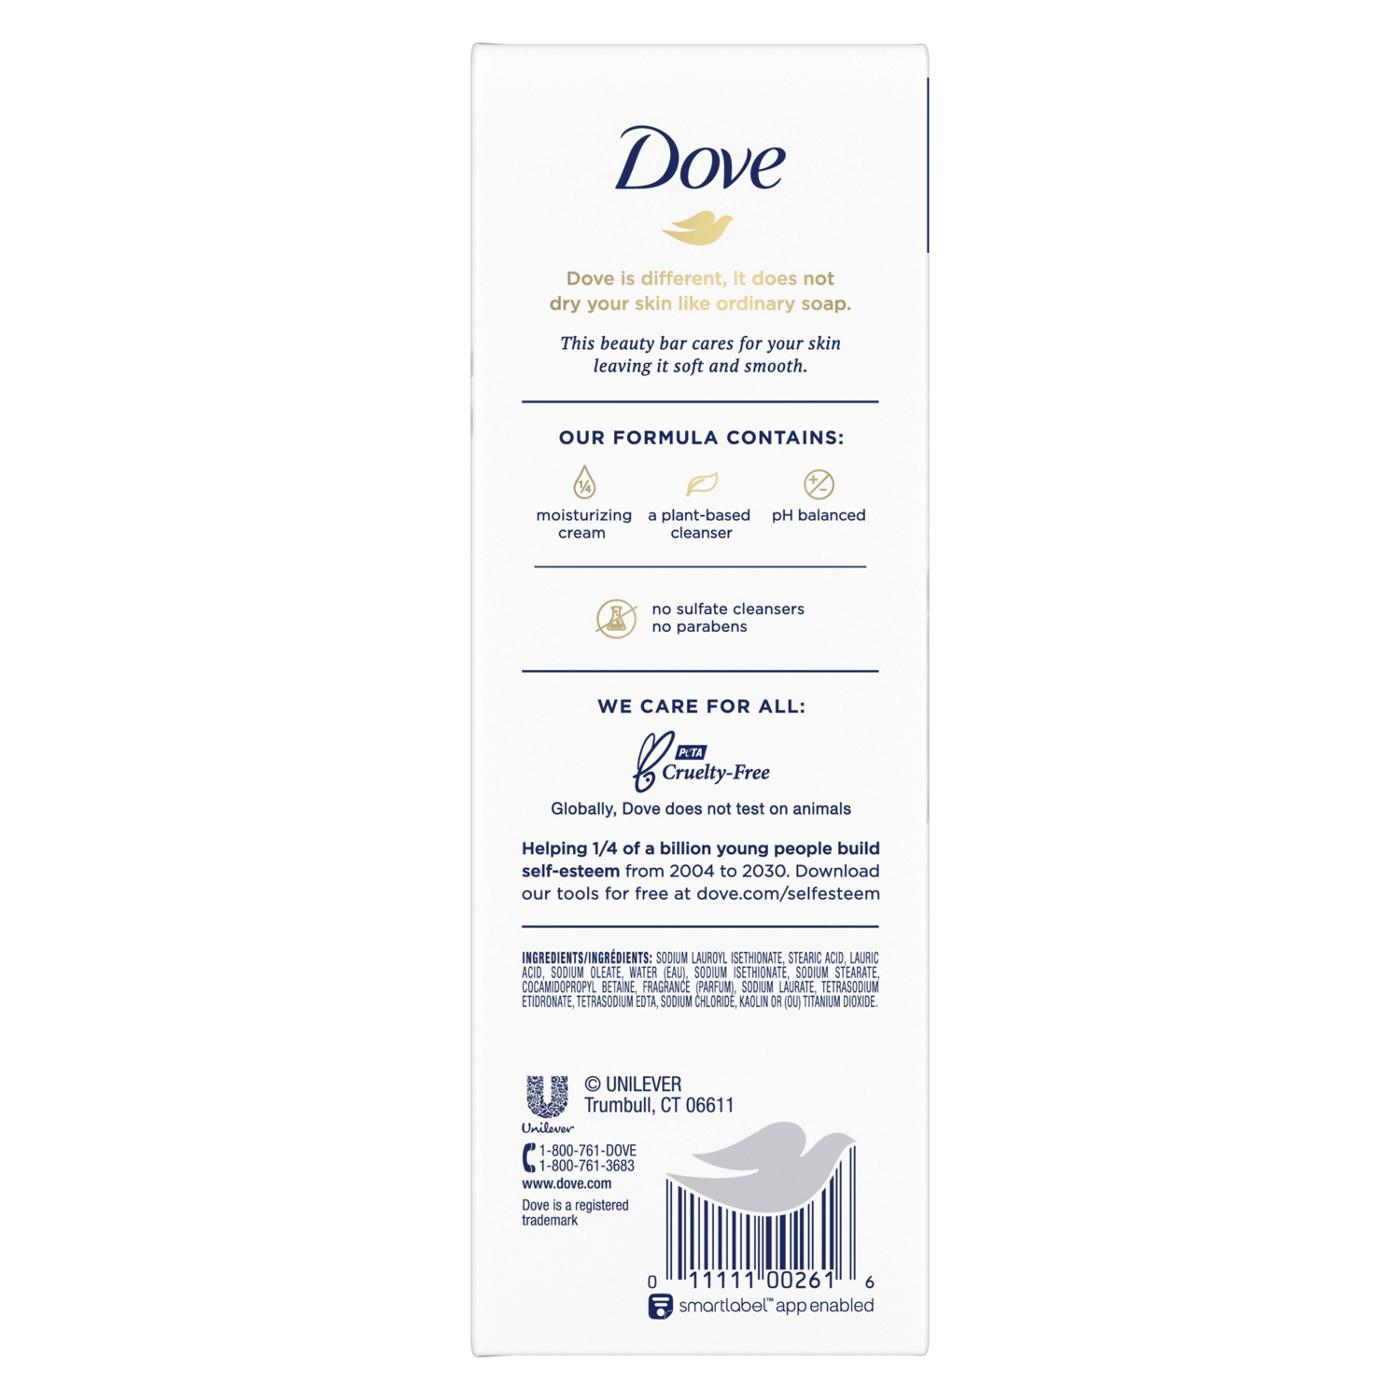 Dove Beauty Bar - Original; image 2 of 3